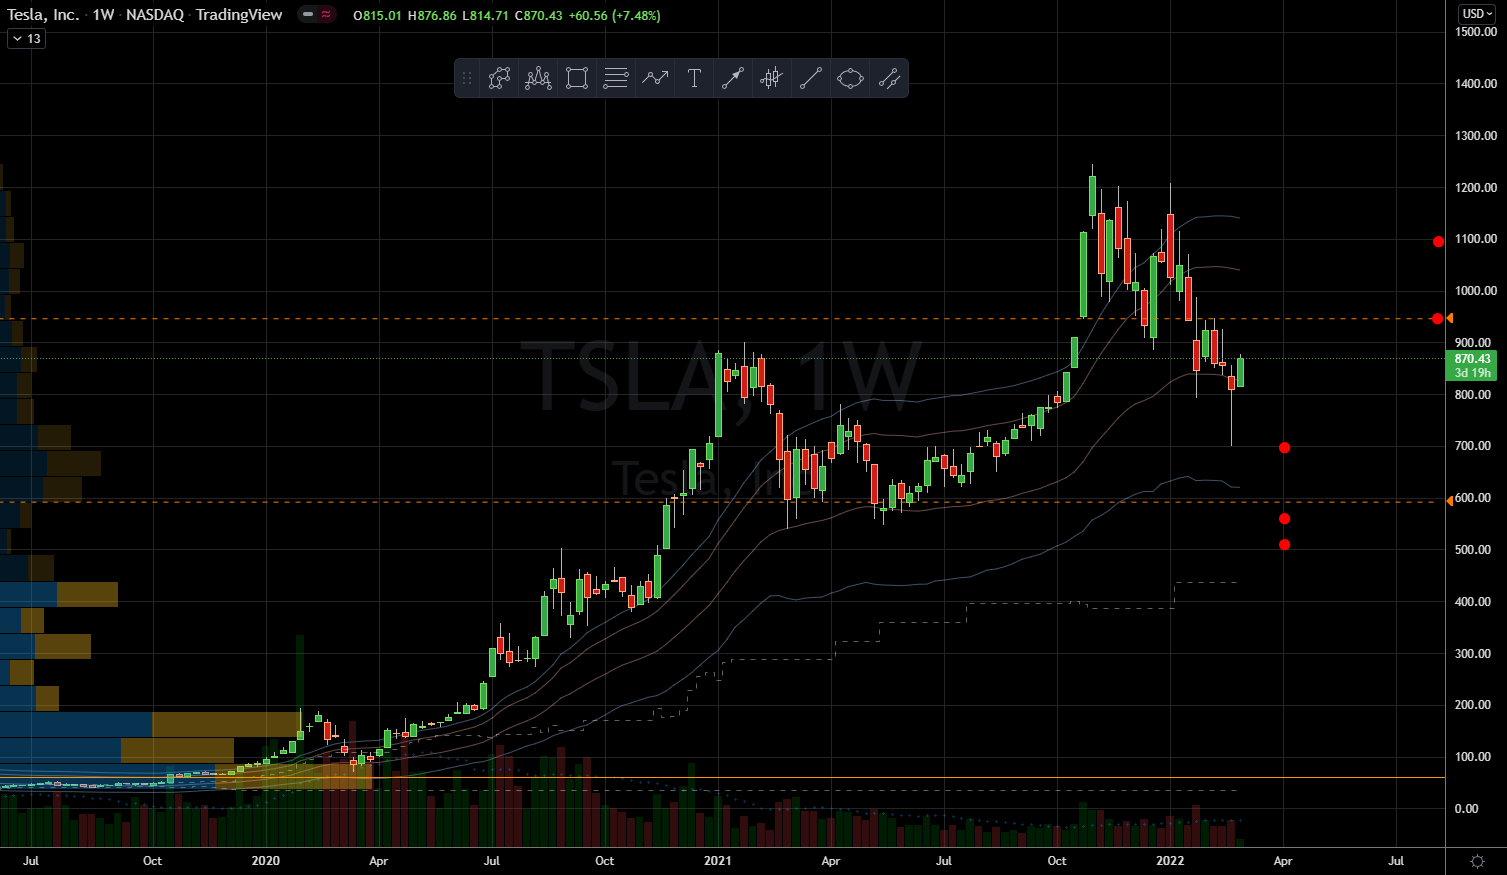 EV Stocks to Buy: Tesla (TSLA) Stock Chart Showing Potential Support Below